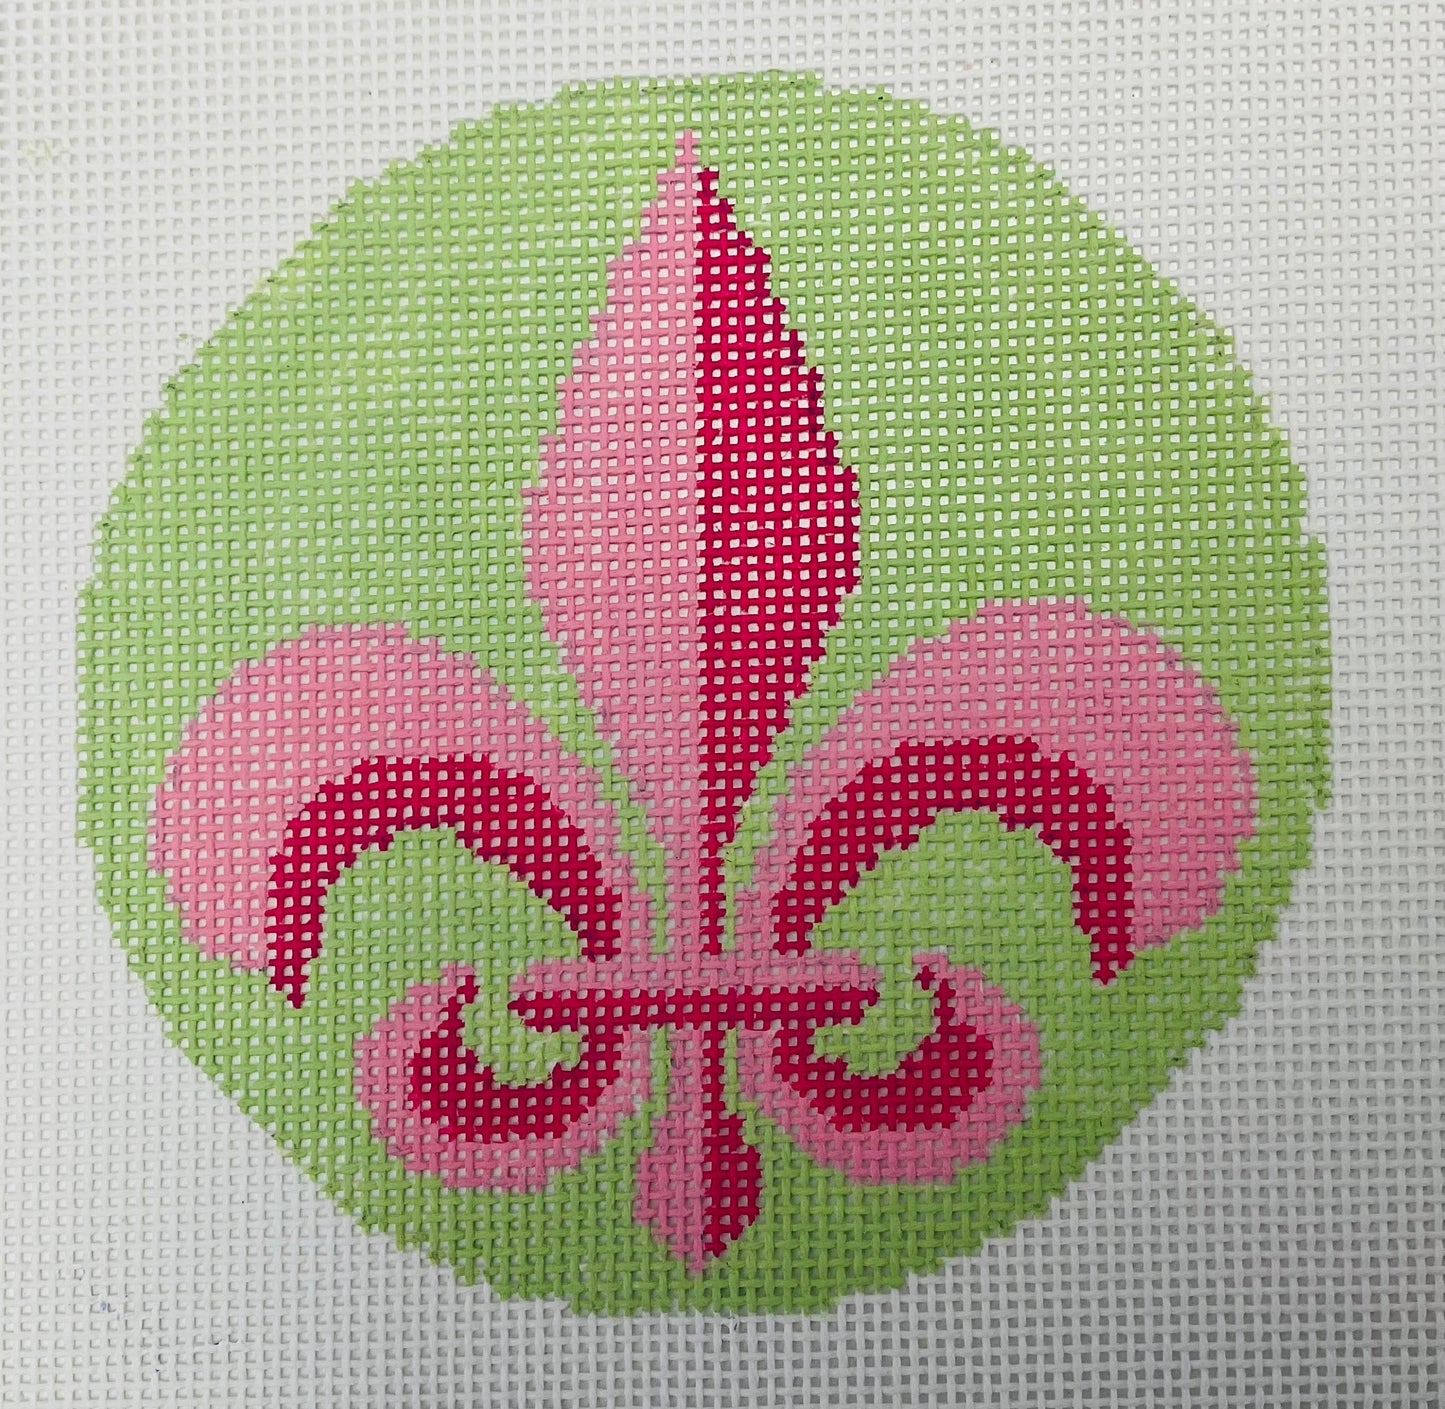 Fleur De Lis Pinks on Green Background (2 toned)